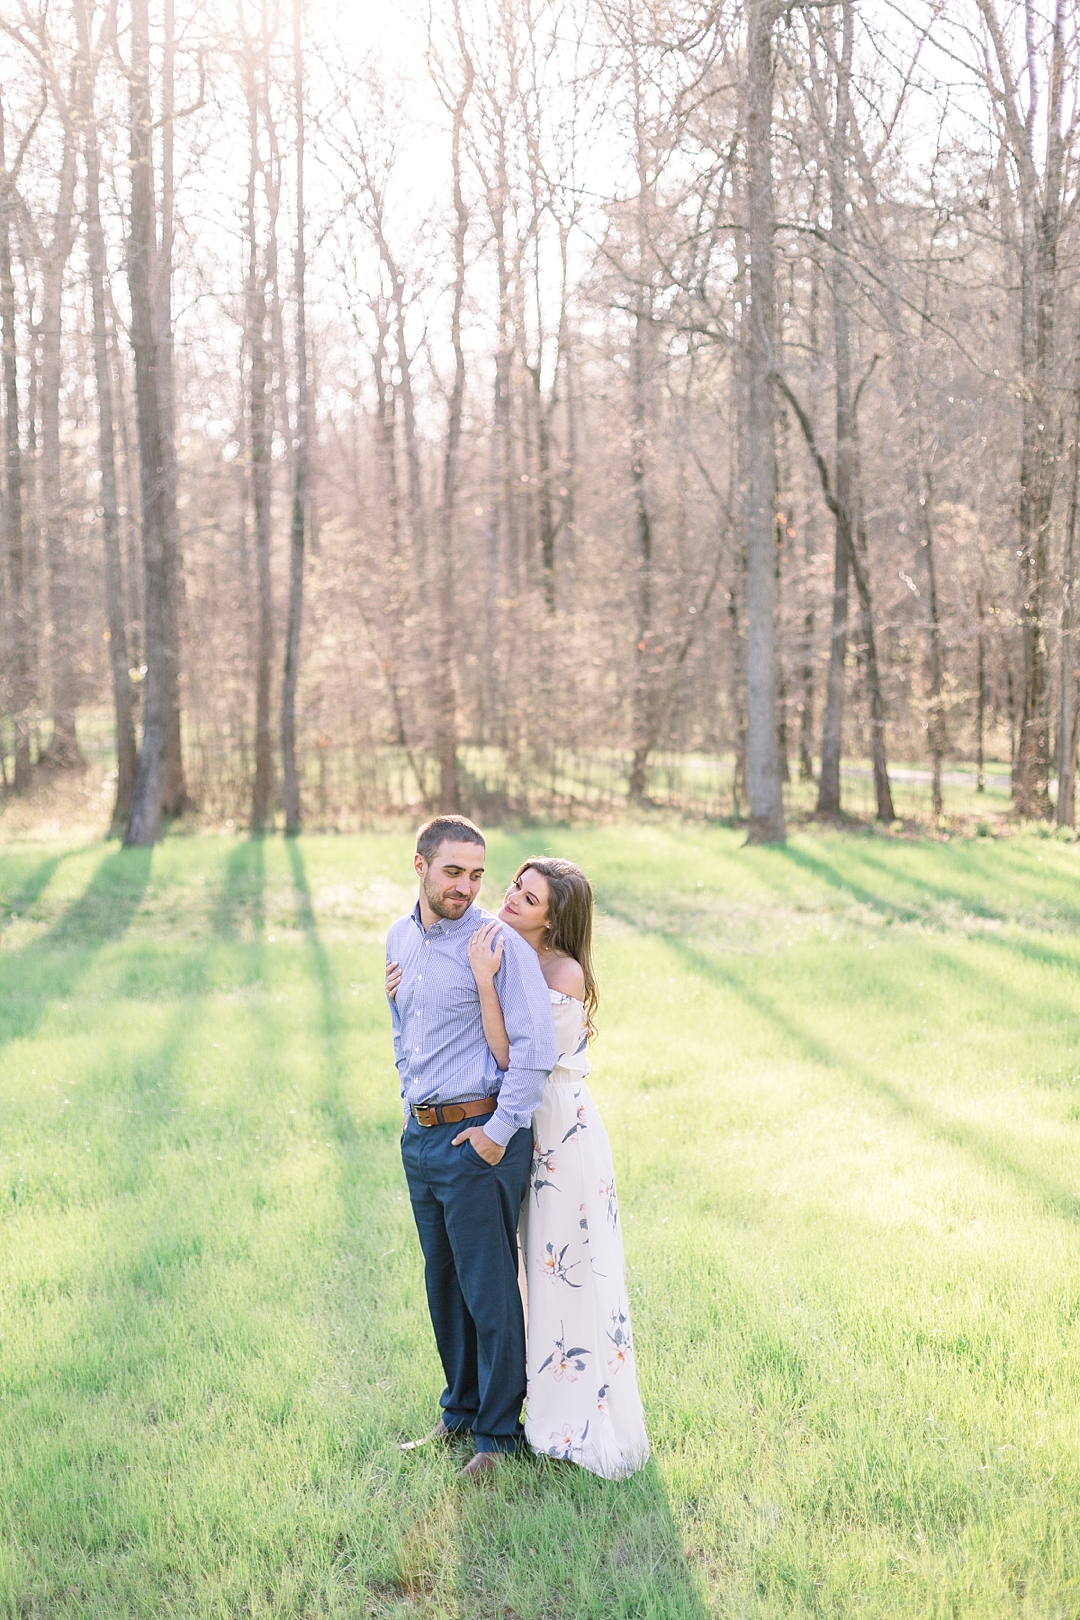 Photos by Leigh Wolfe, Atlanta's top wedding photographer